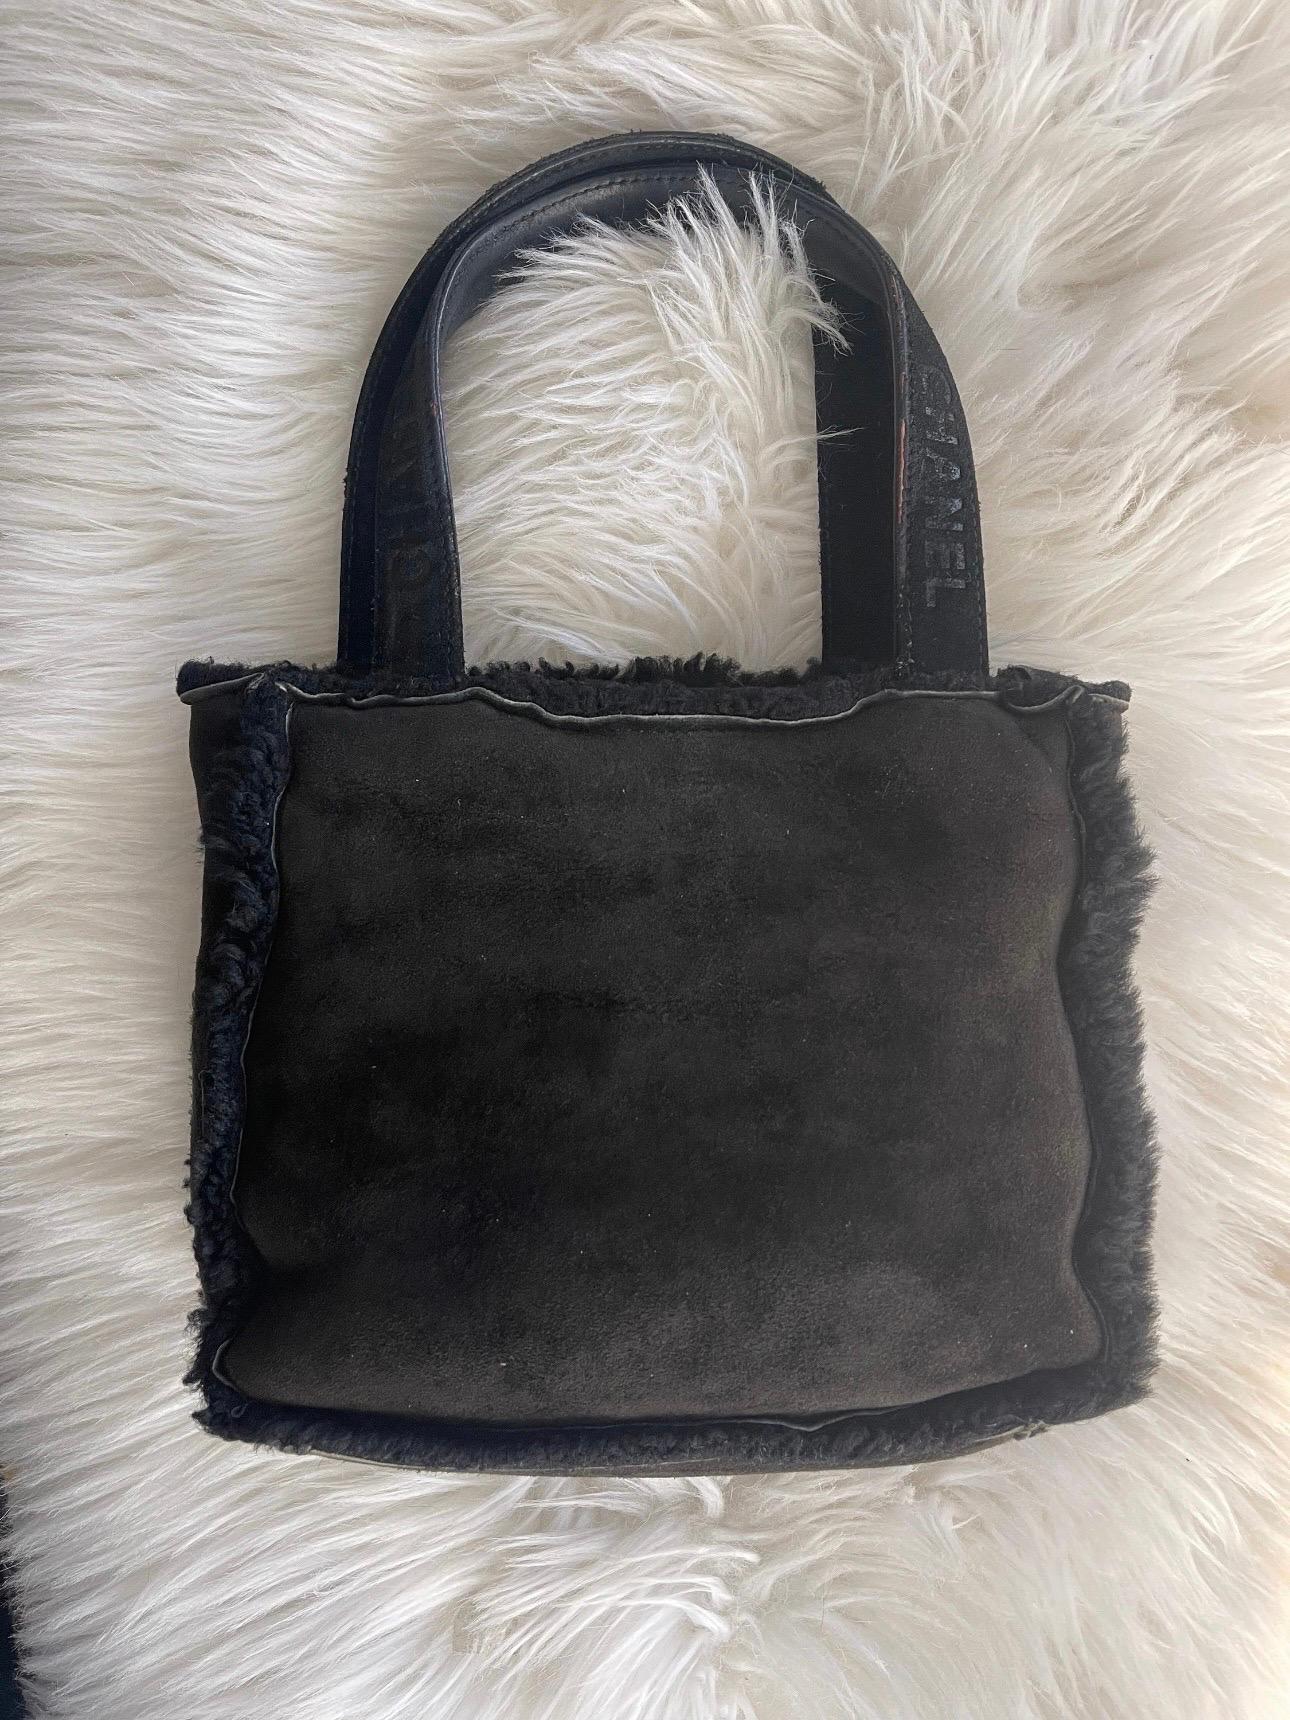 Vintage 90s Chanel Suede with Fur Trim Handbag Top Handle Satchel Flap Bag Purse In Good Condition For Sale In Malibu, CA